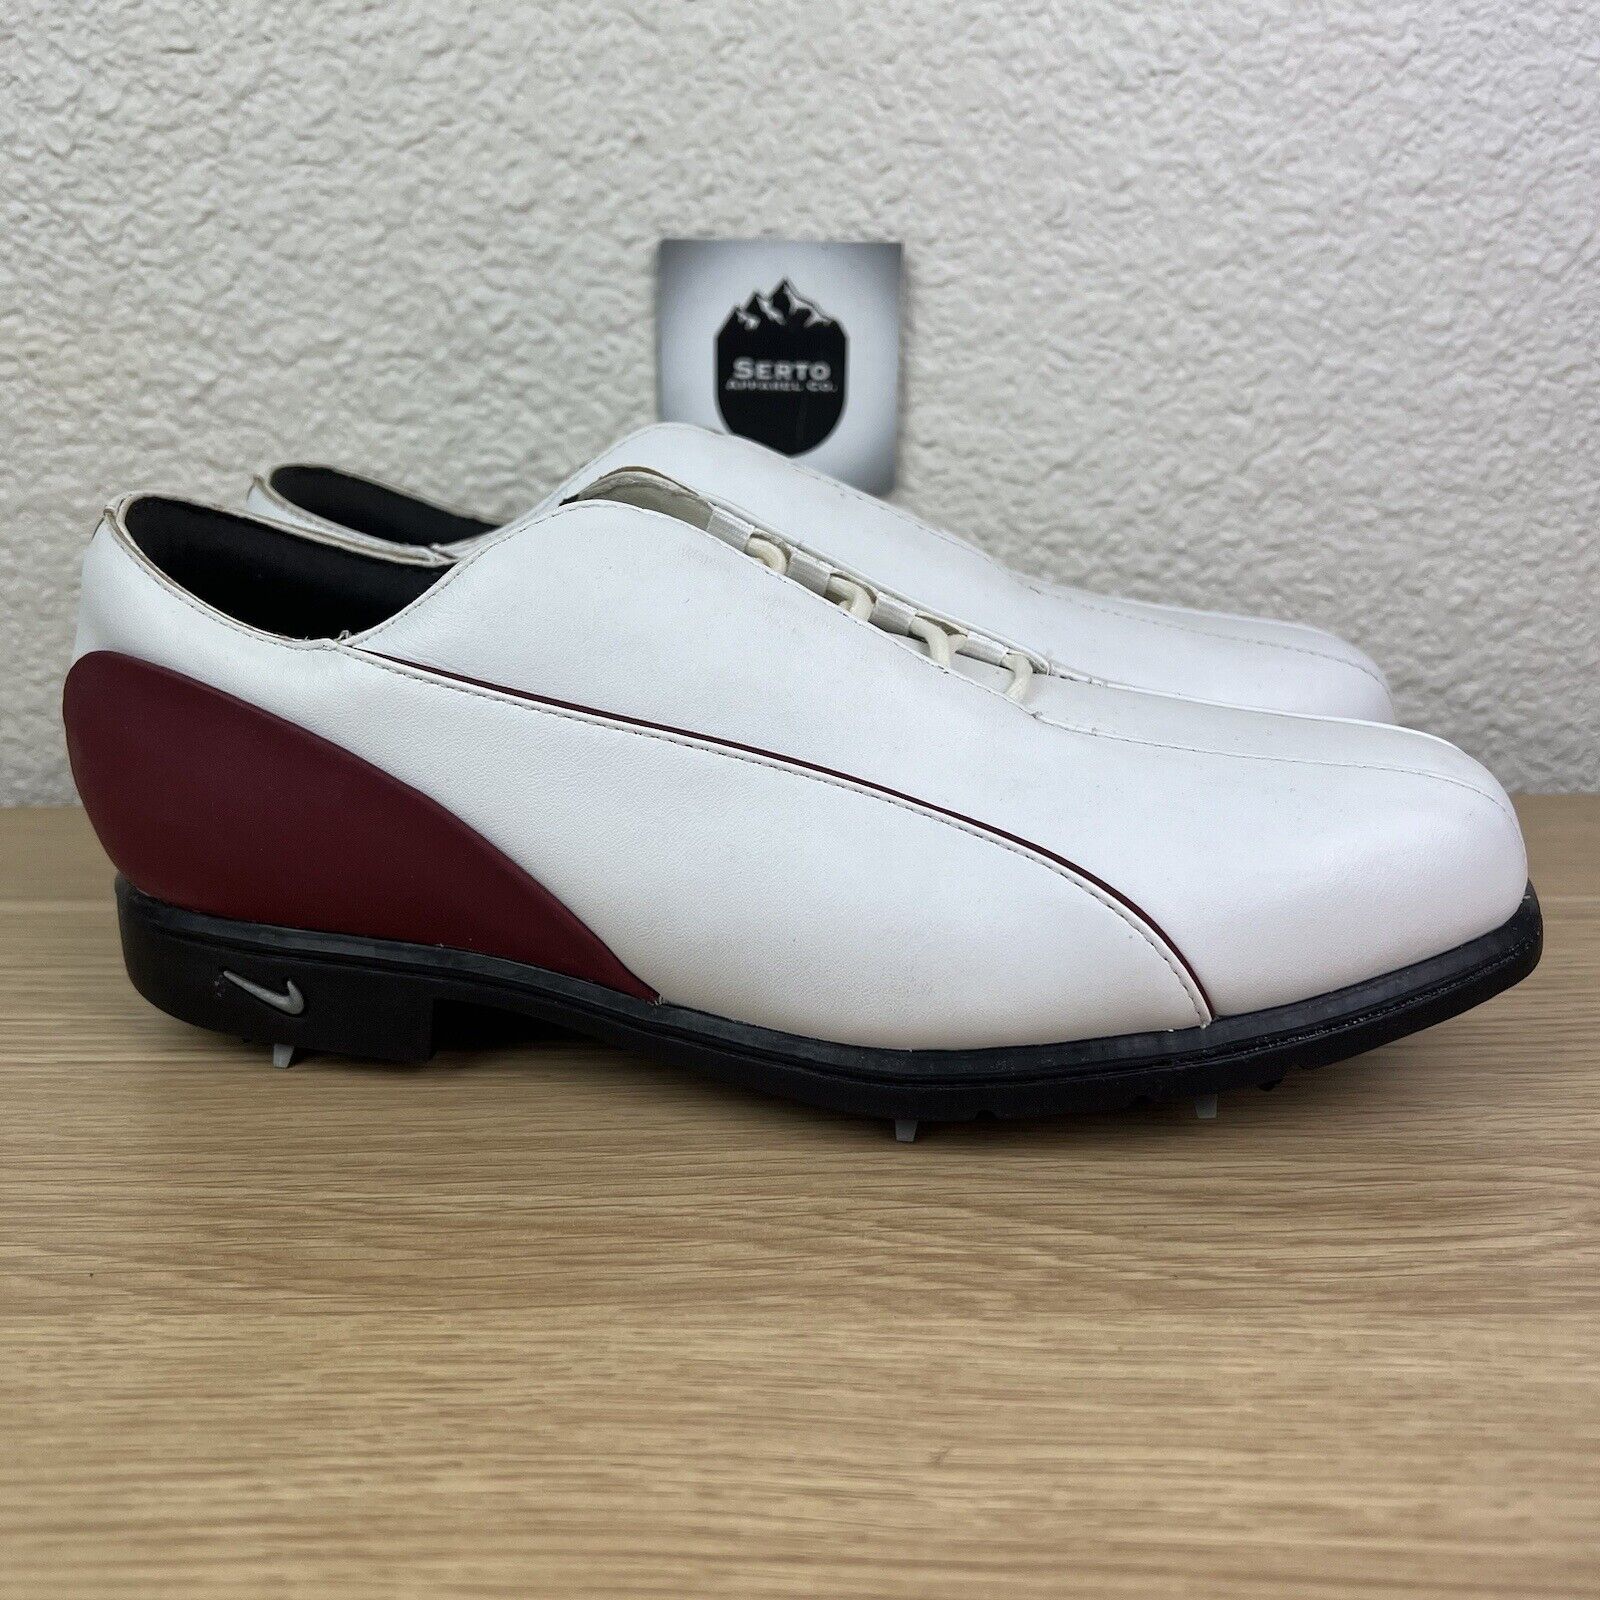 Nike Verdana Last Golf Shoes White/Maroon Women’s Size 8.5 (307426-161)